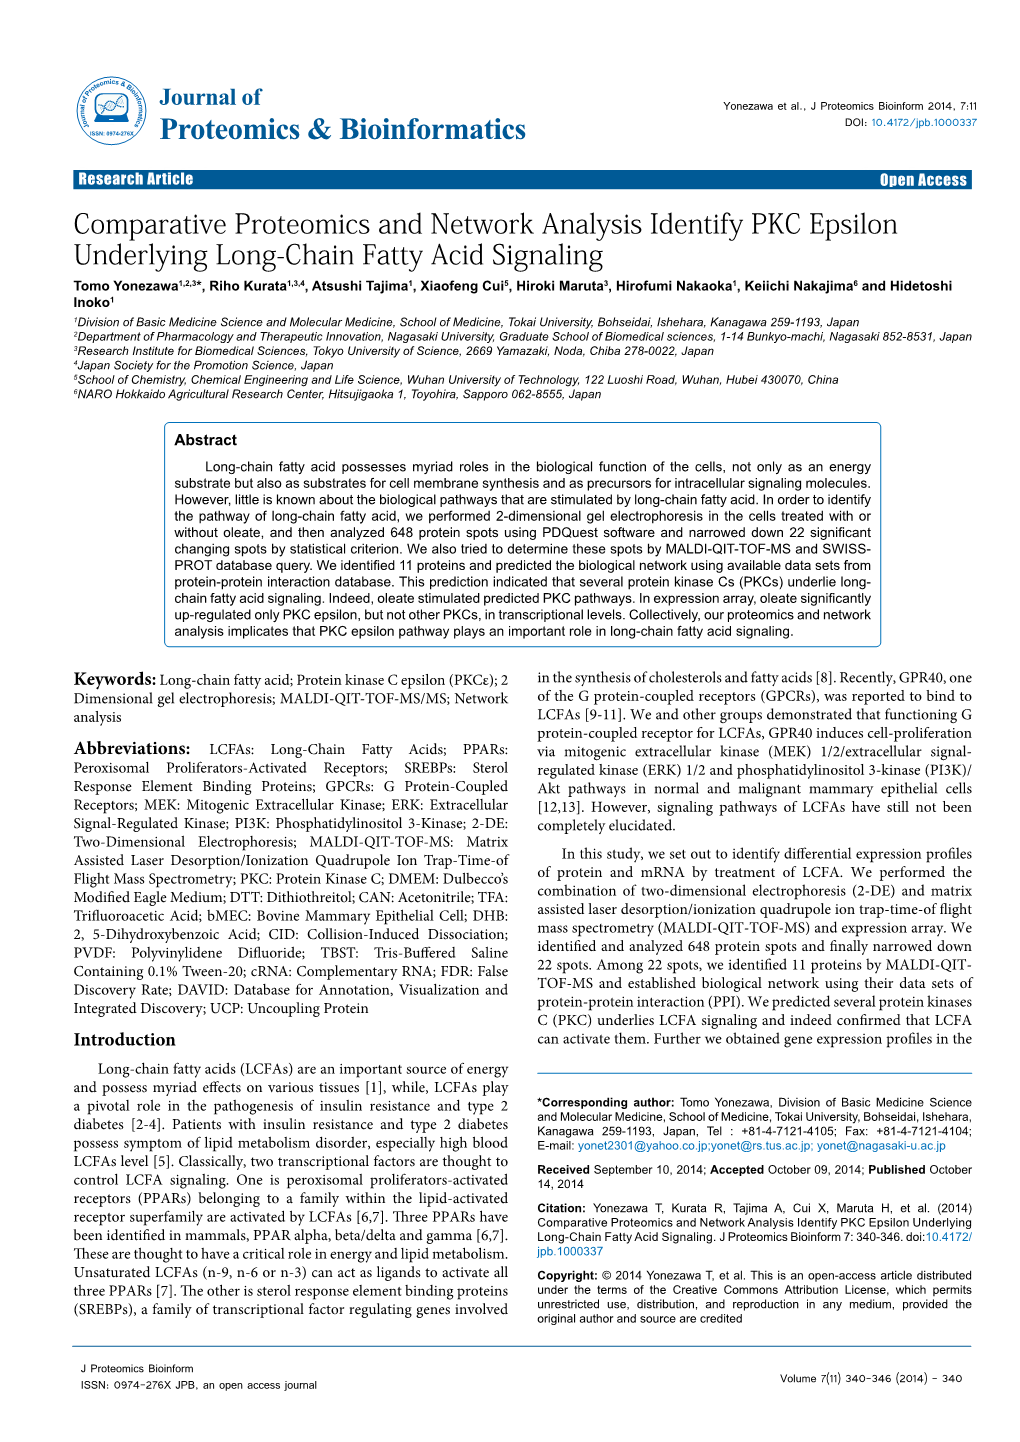 Comparative Proteomics and Network Analysis Identify PKC Epsilon Underlying Long-Chain Fatty Acid Signaling